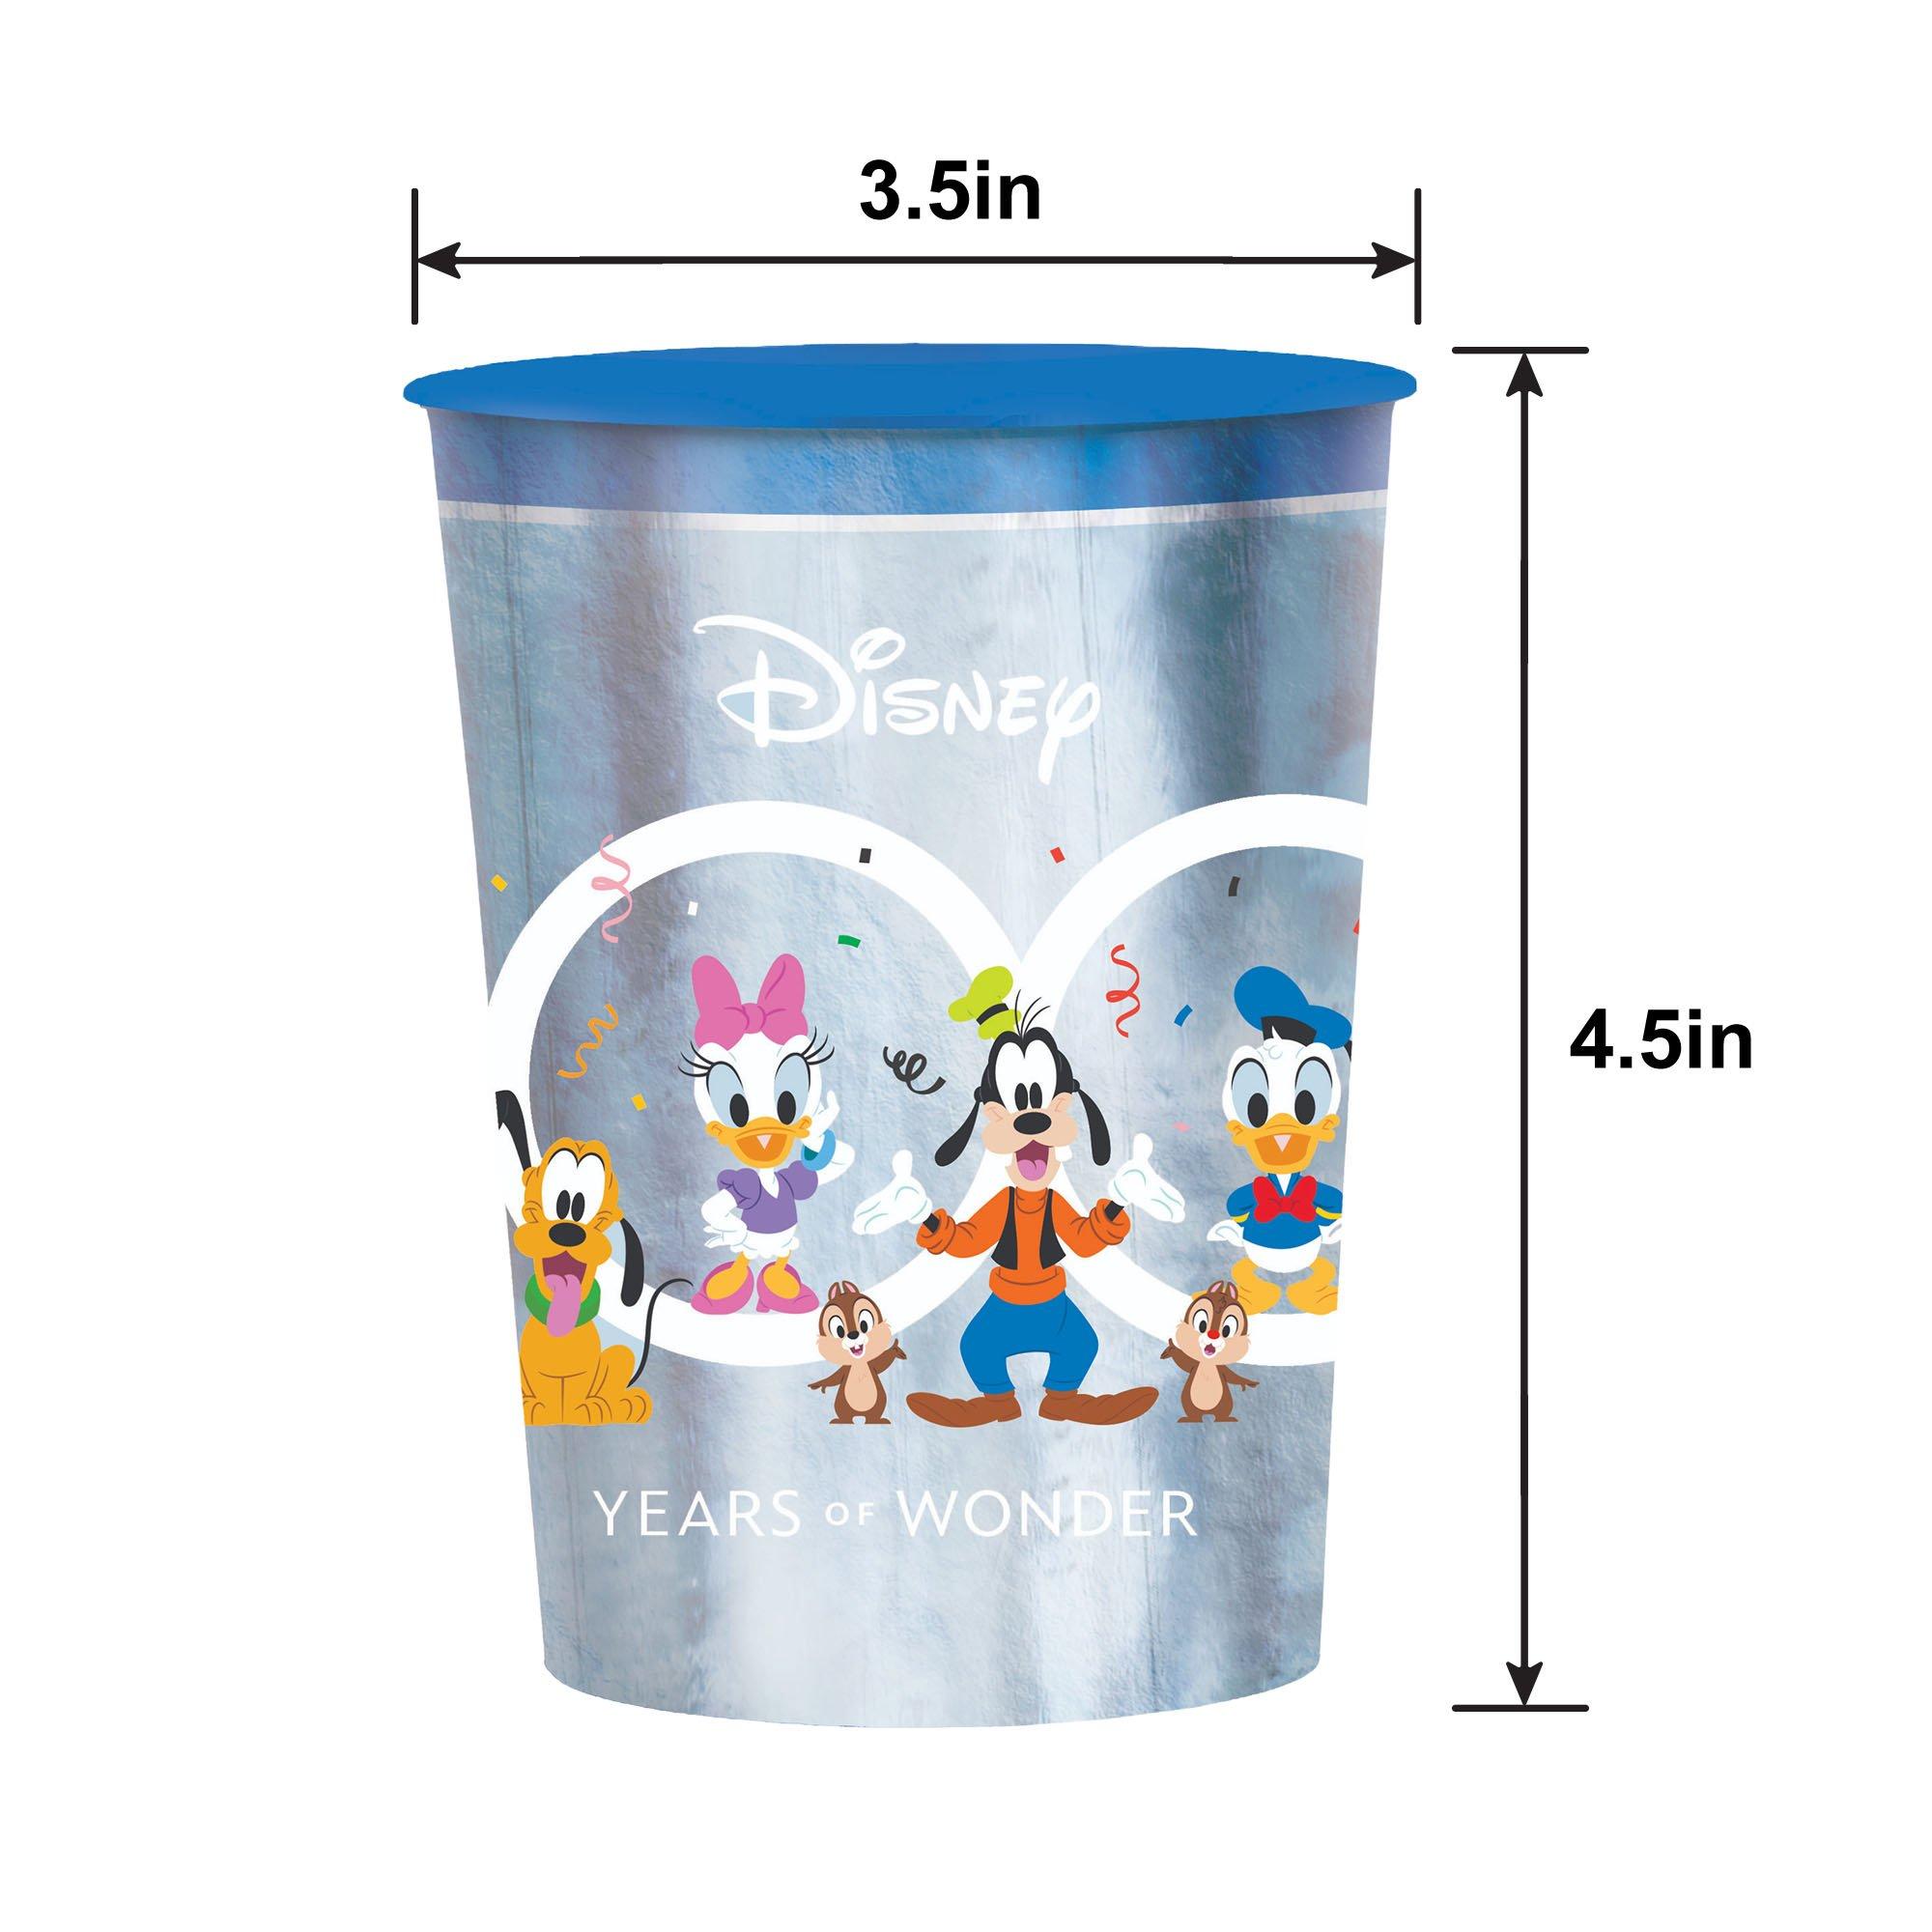 Disney Coffee Mug With Lid - Disney 100 Mickey And Friends